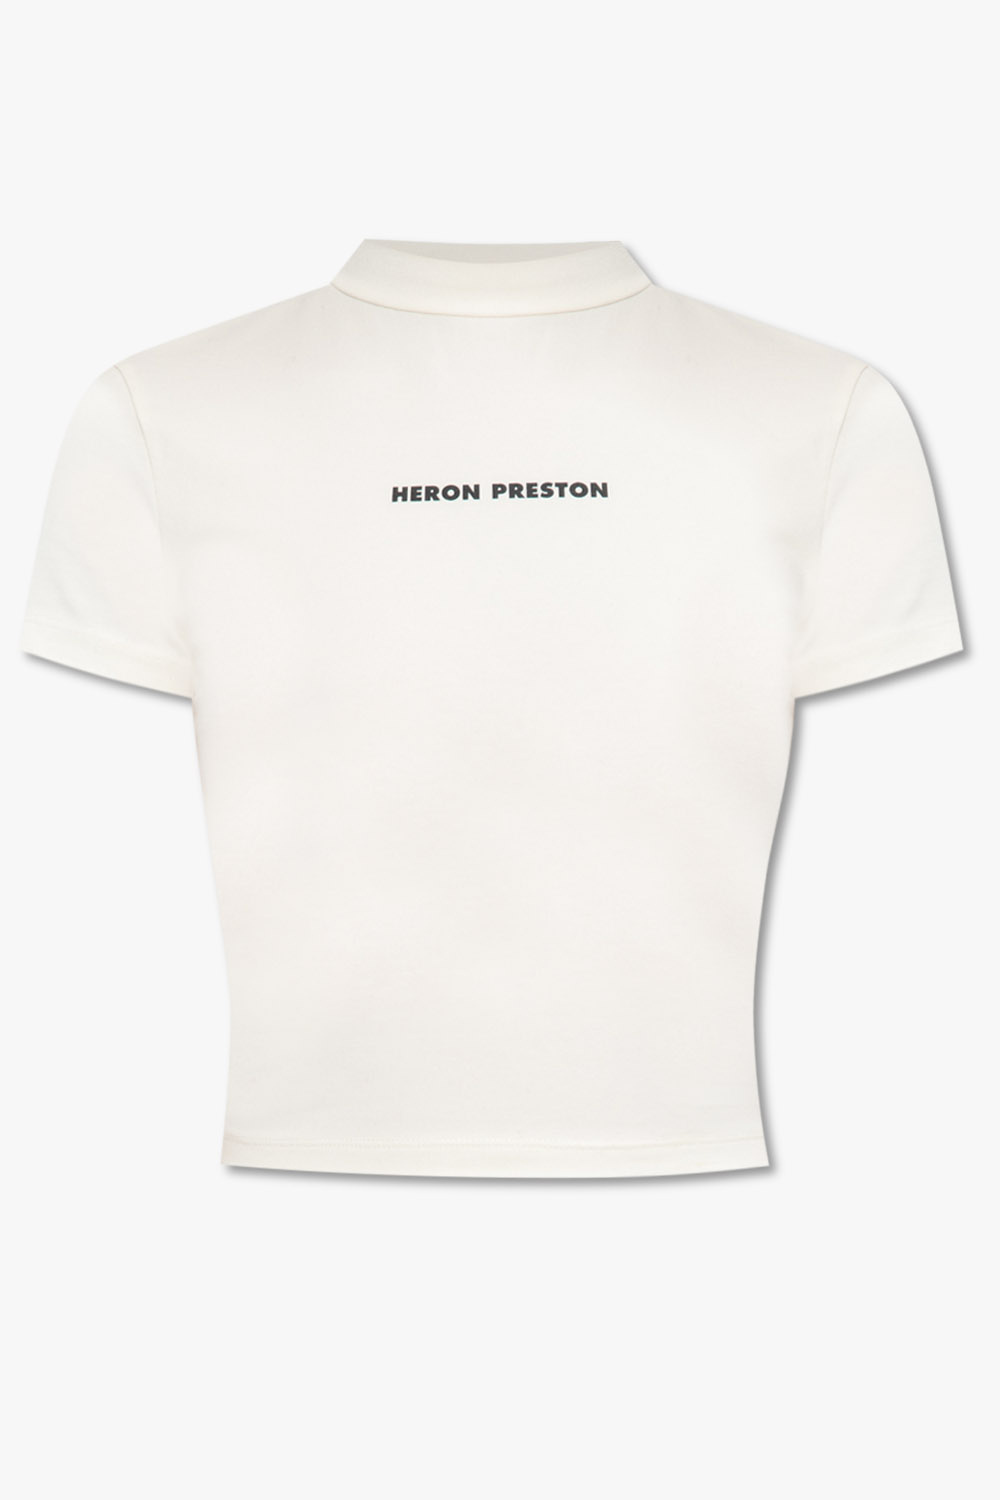 Heron Preston buy tommy hilfiger essential parka jacket